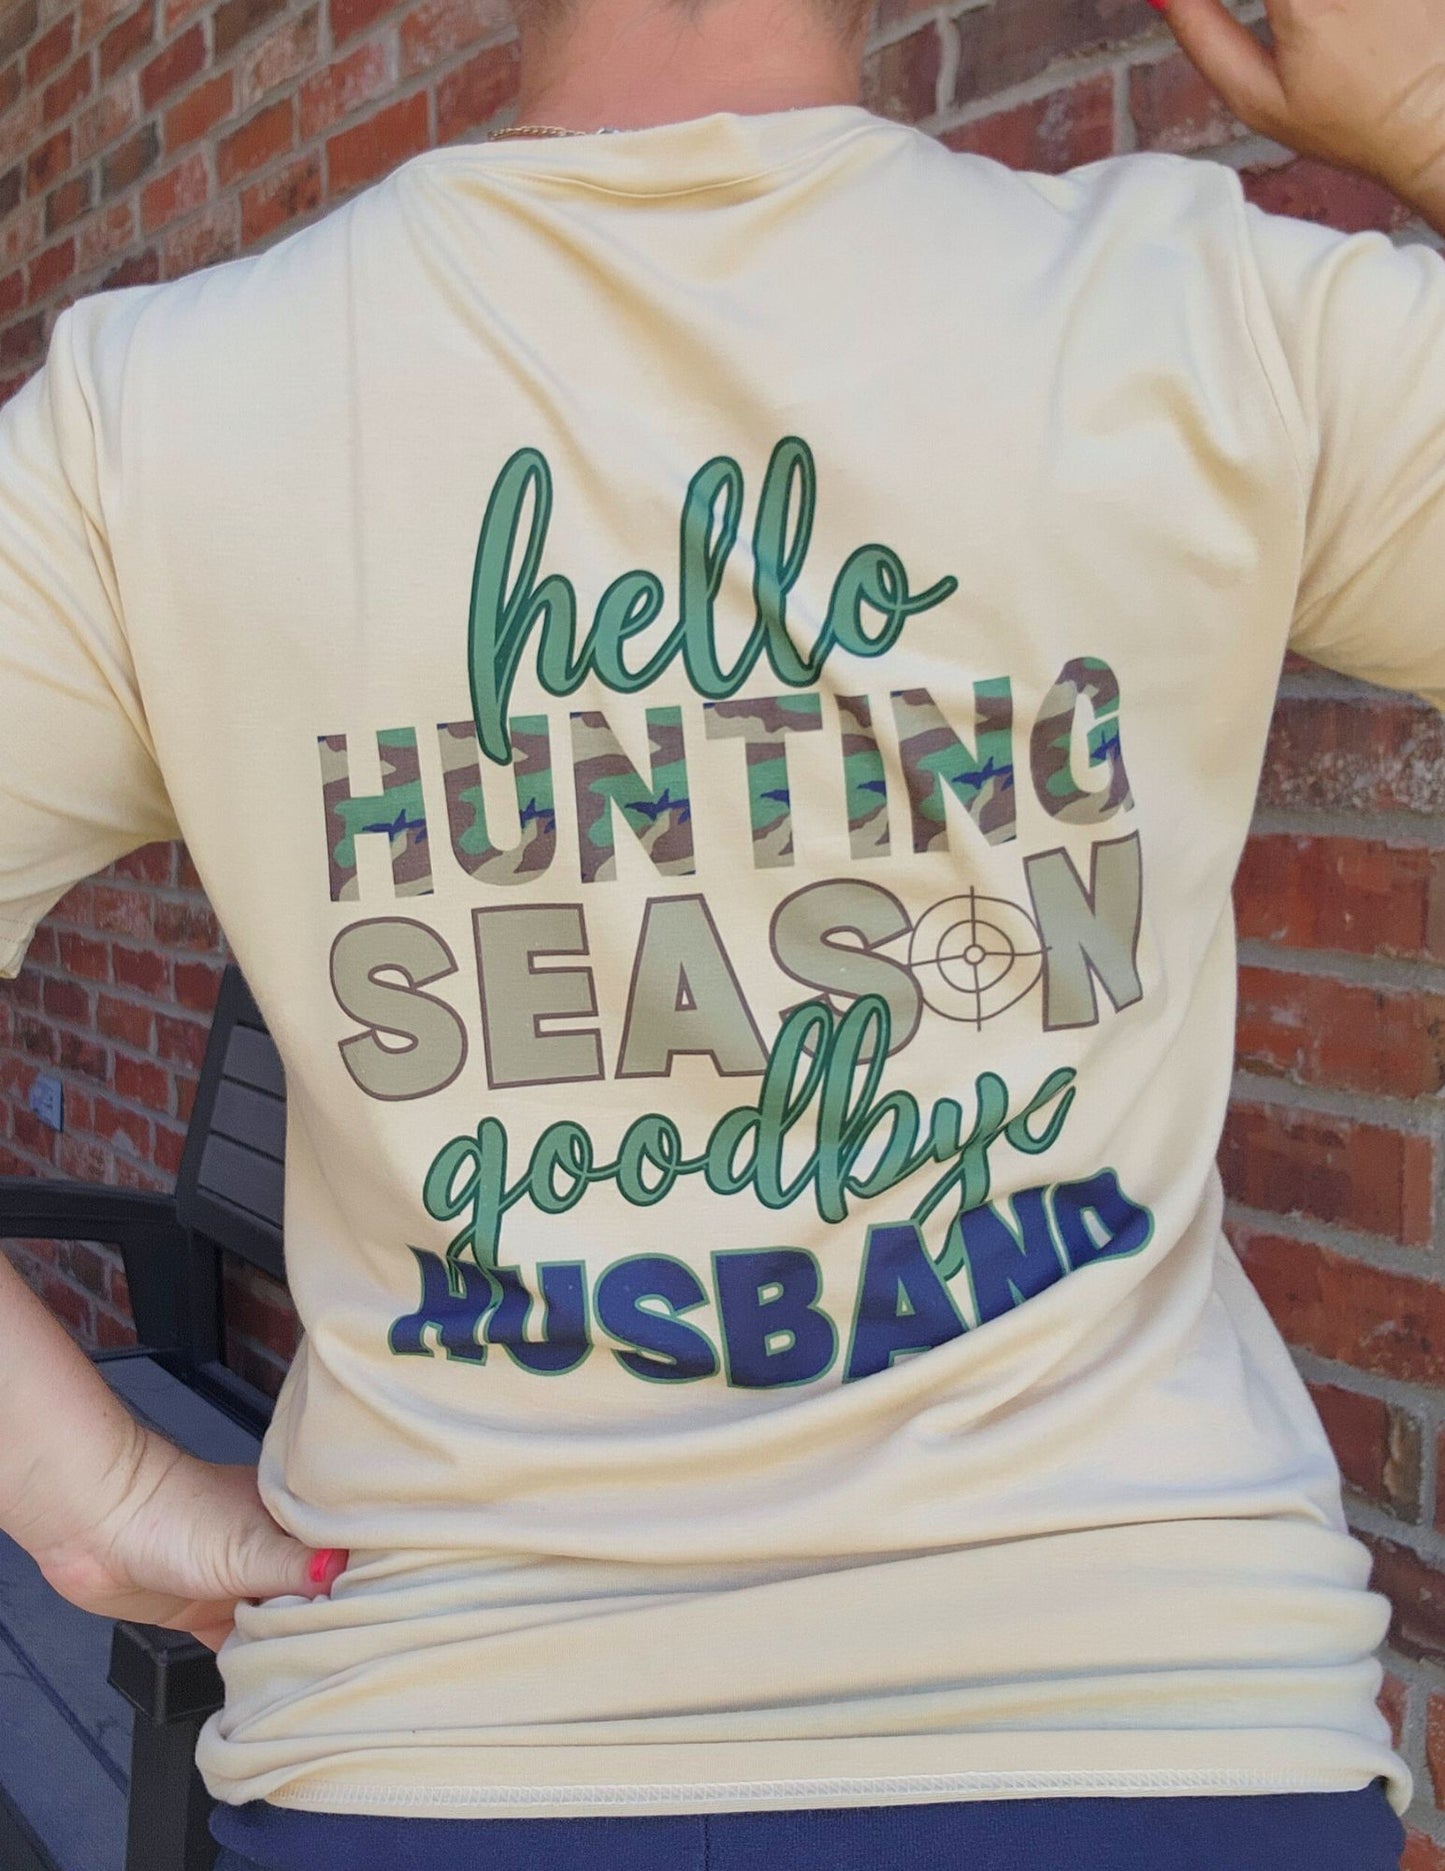 Hello Hunting Season Goodbye Husband - PNG Digital Download